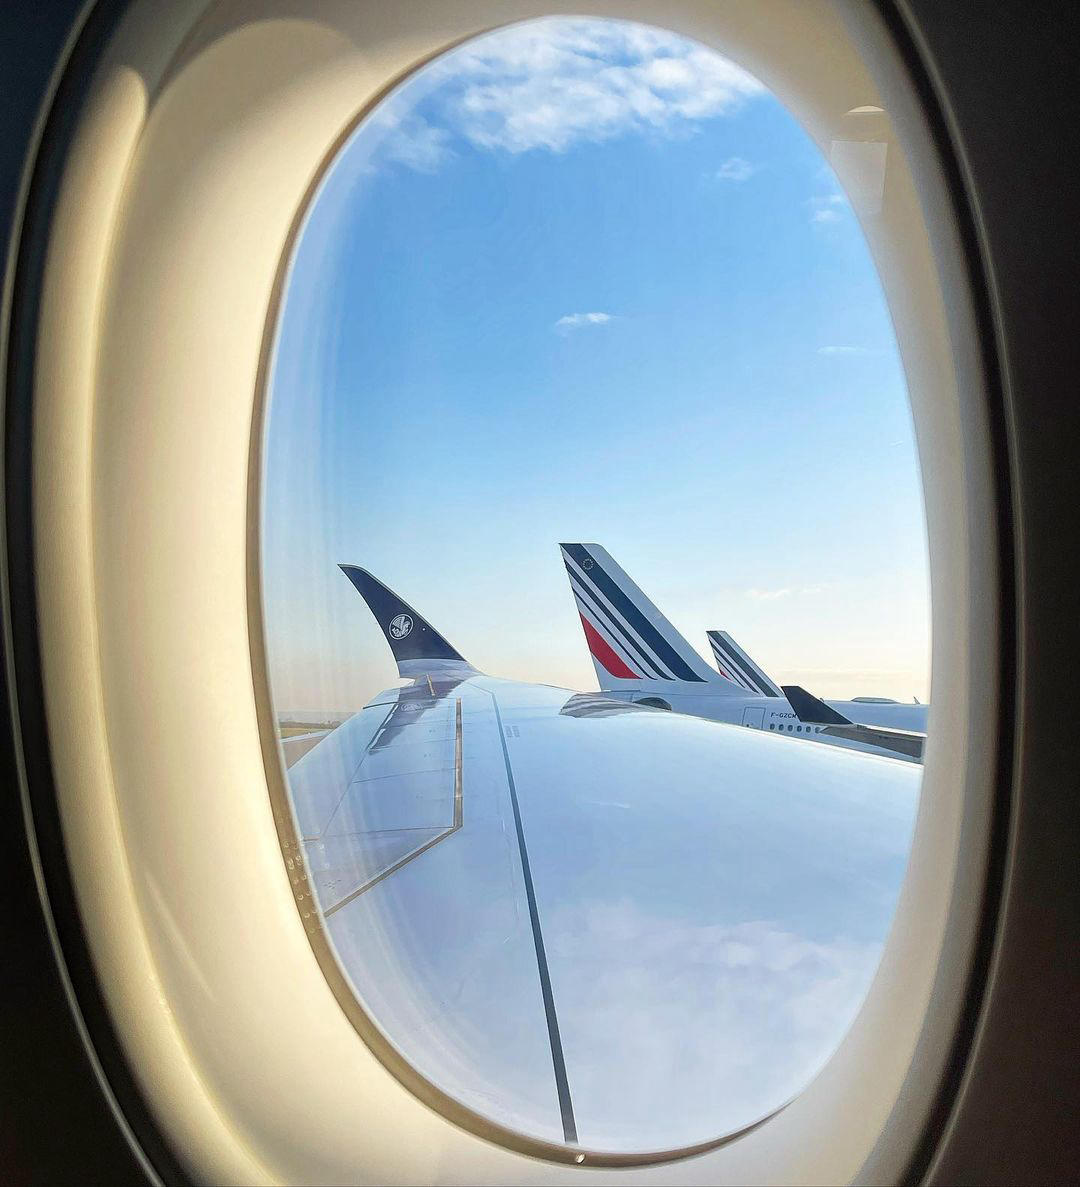 image  1 Air France - Le soleil hivernal illumine nos cabines